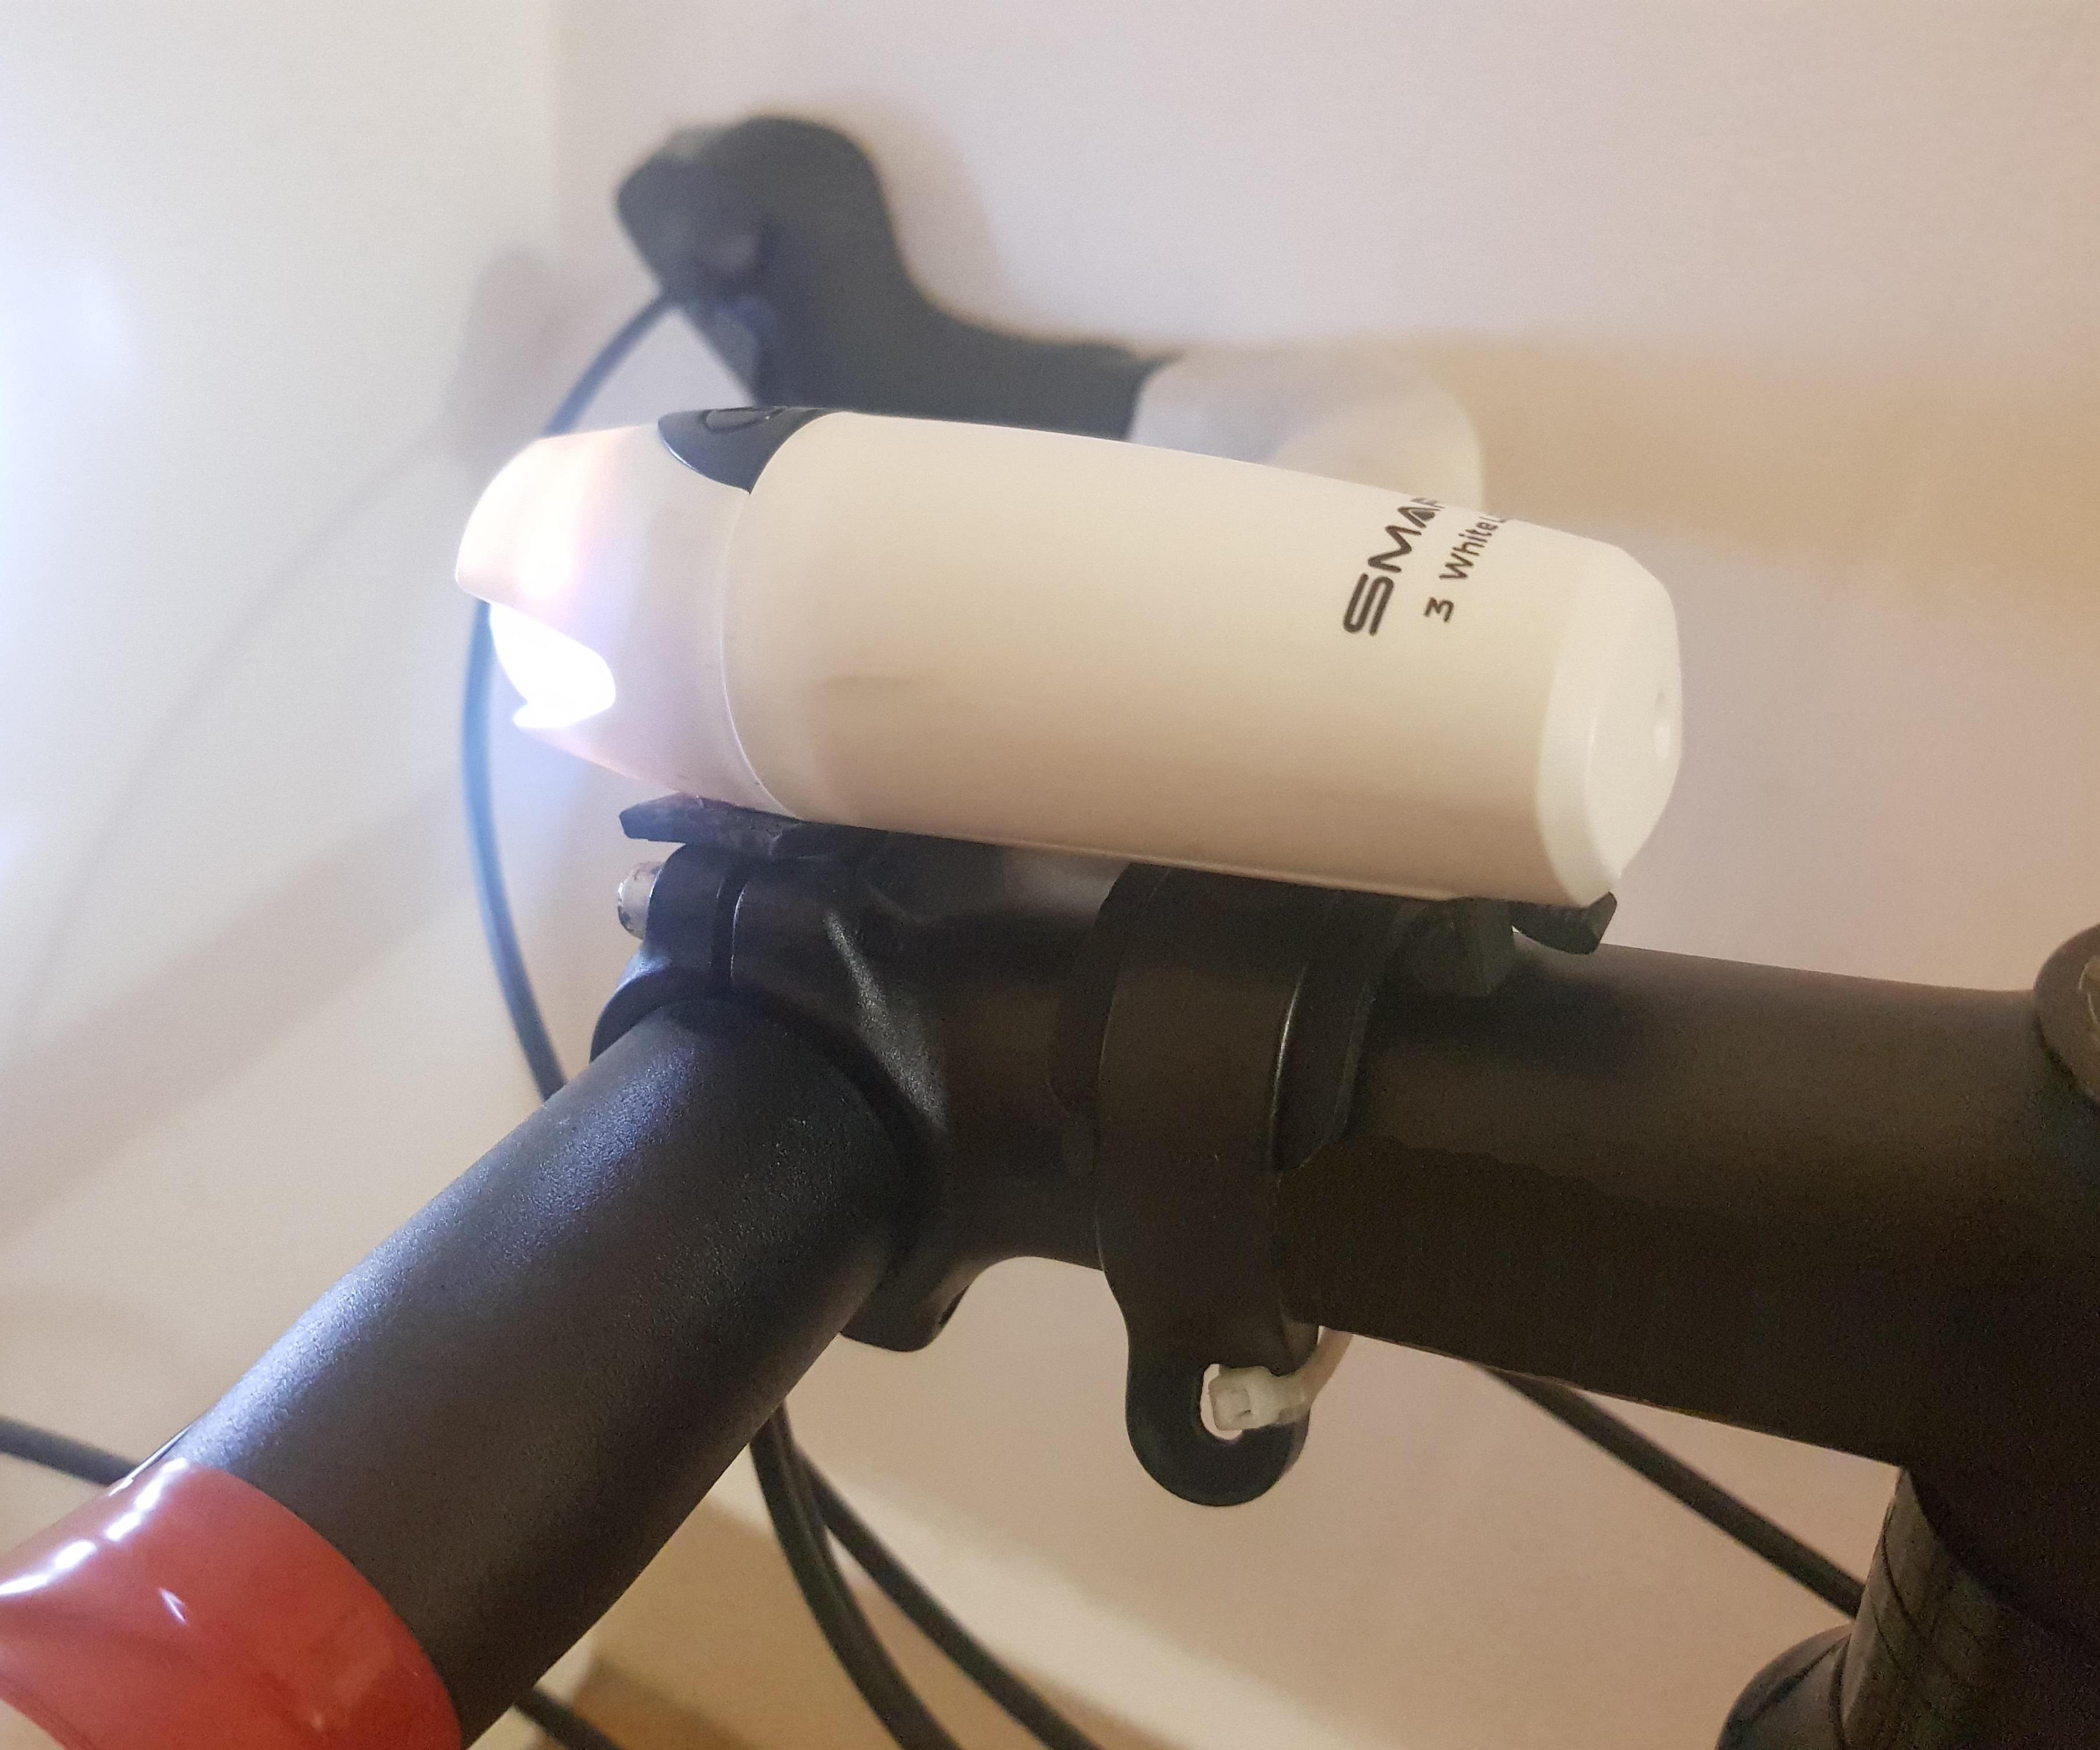 Super Cheap DIY Stem Mount for a Smart Bike Light